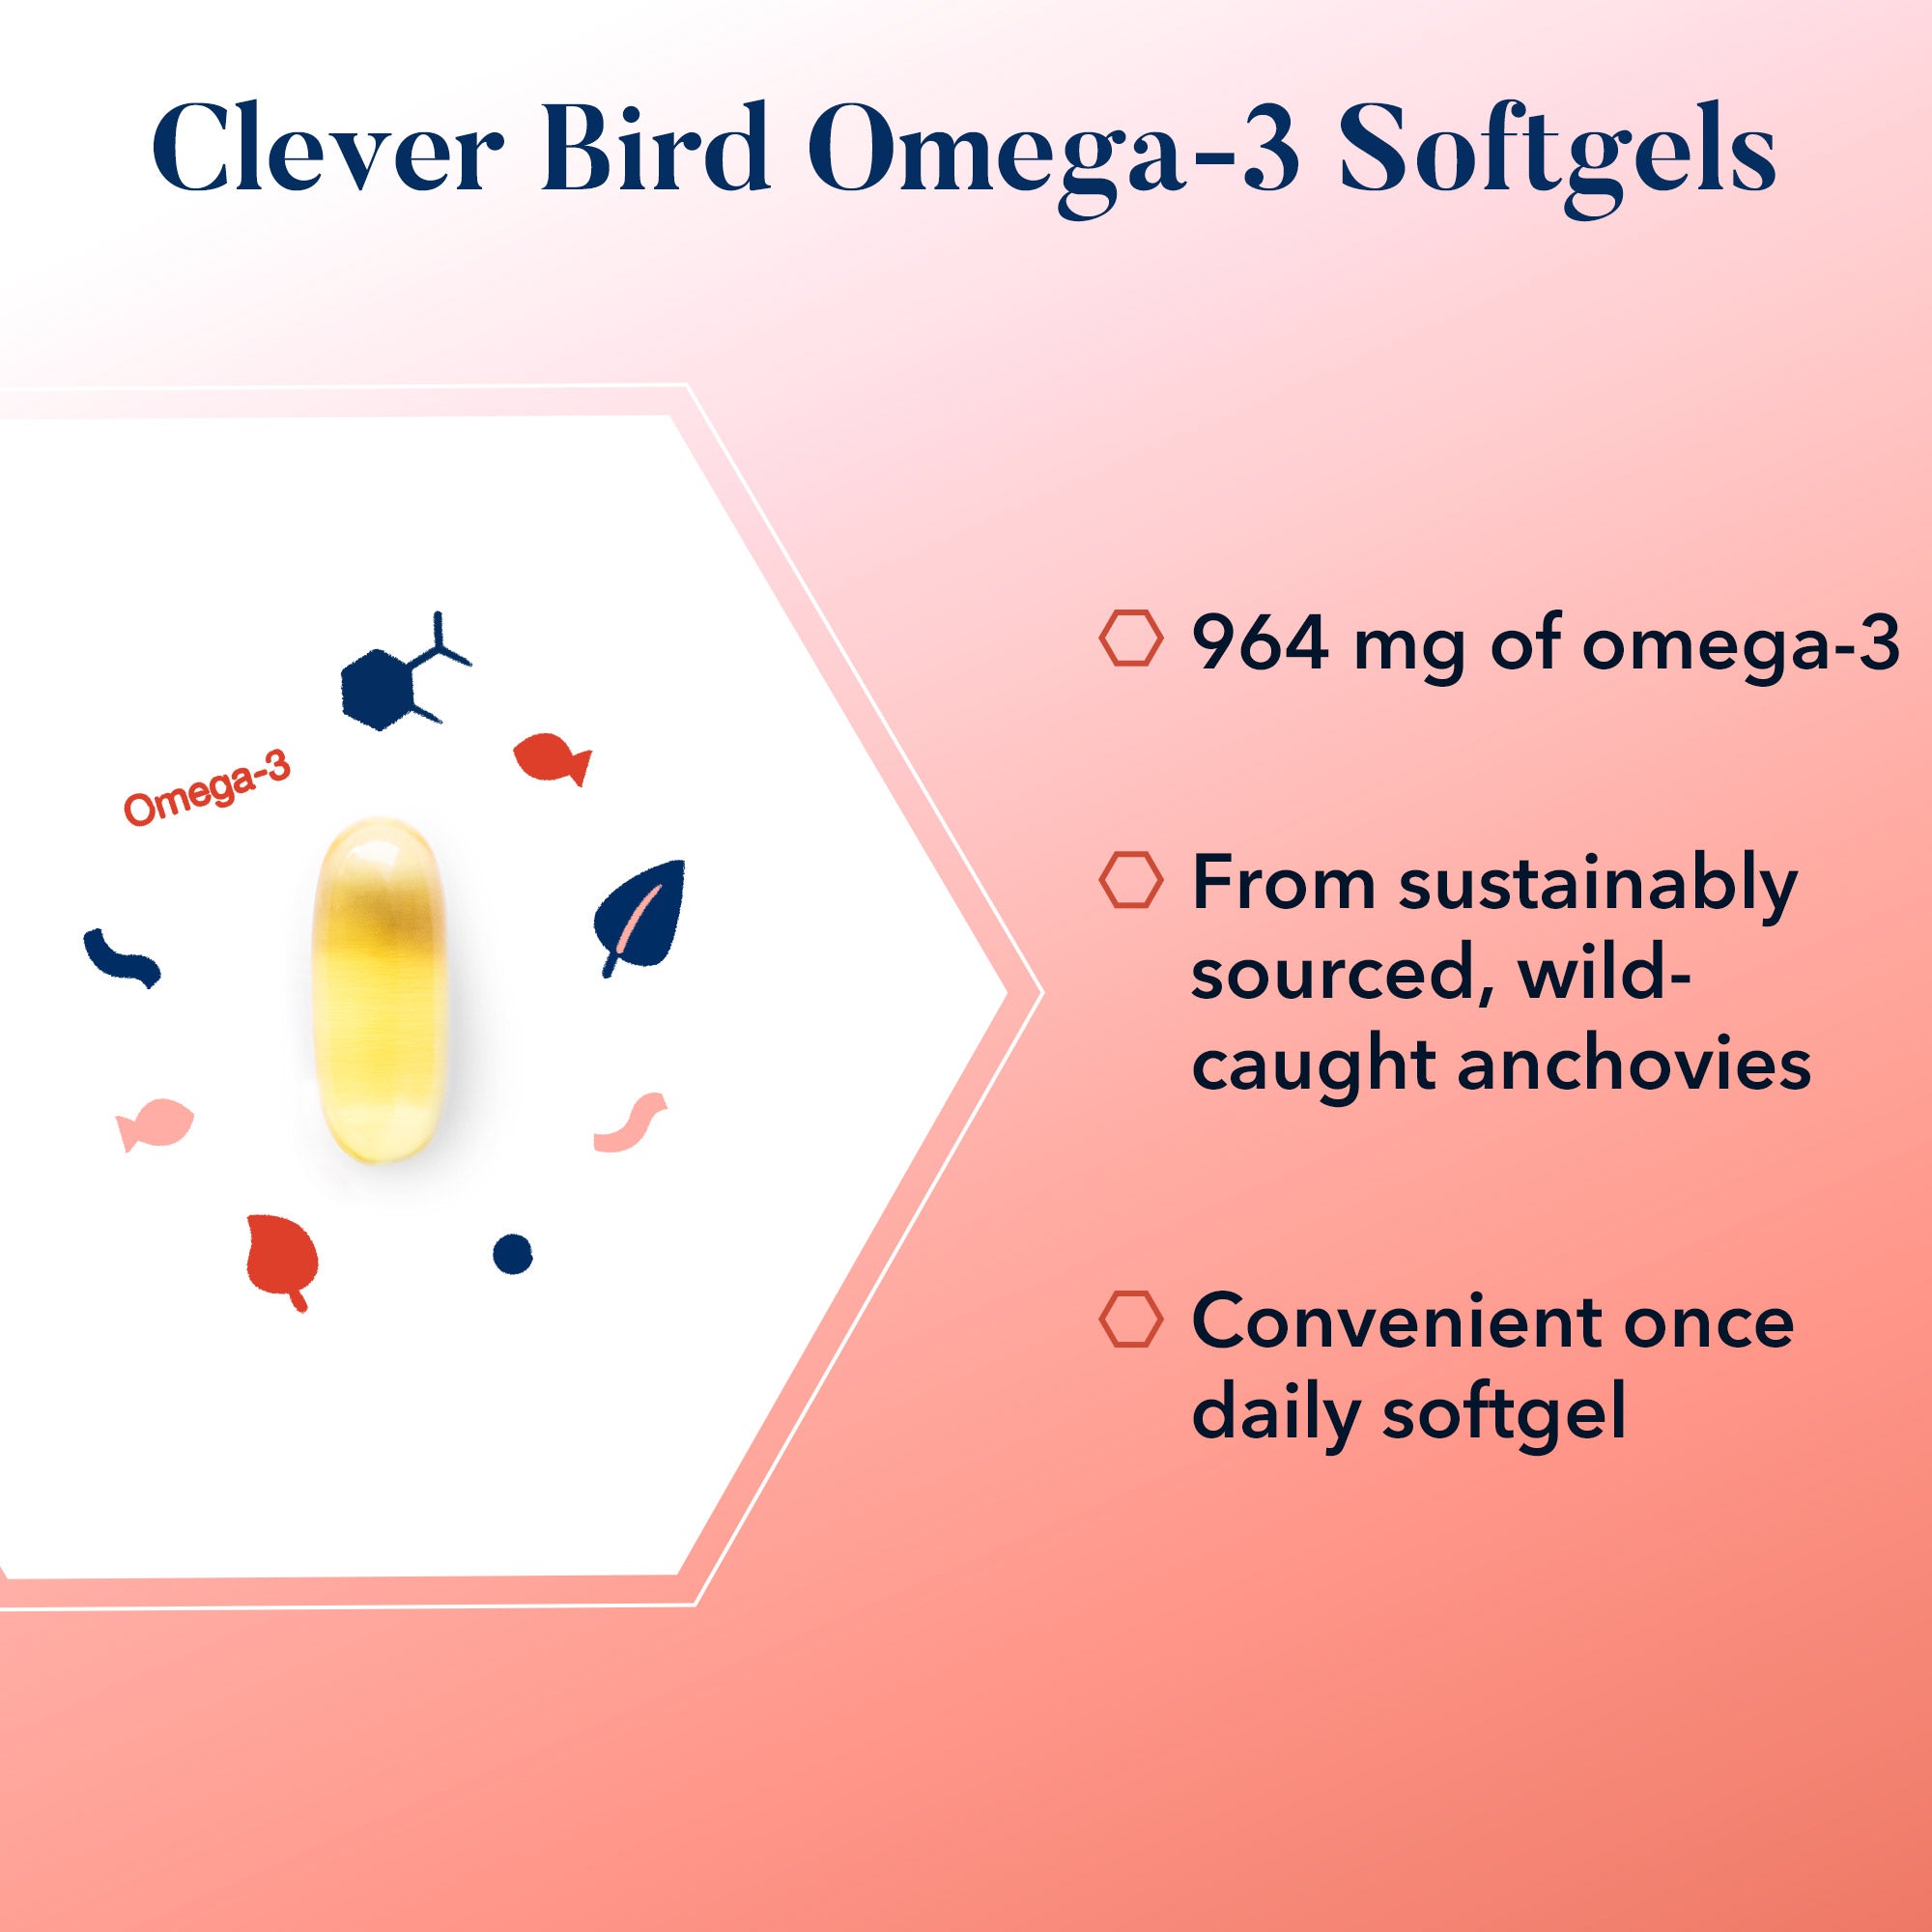 Clever Bird Omega-3 Softgels